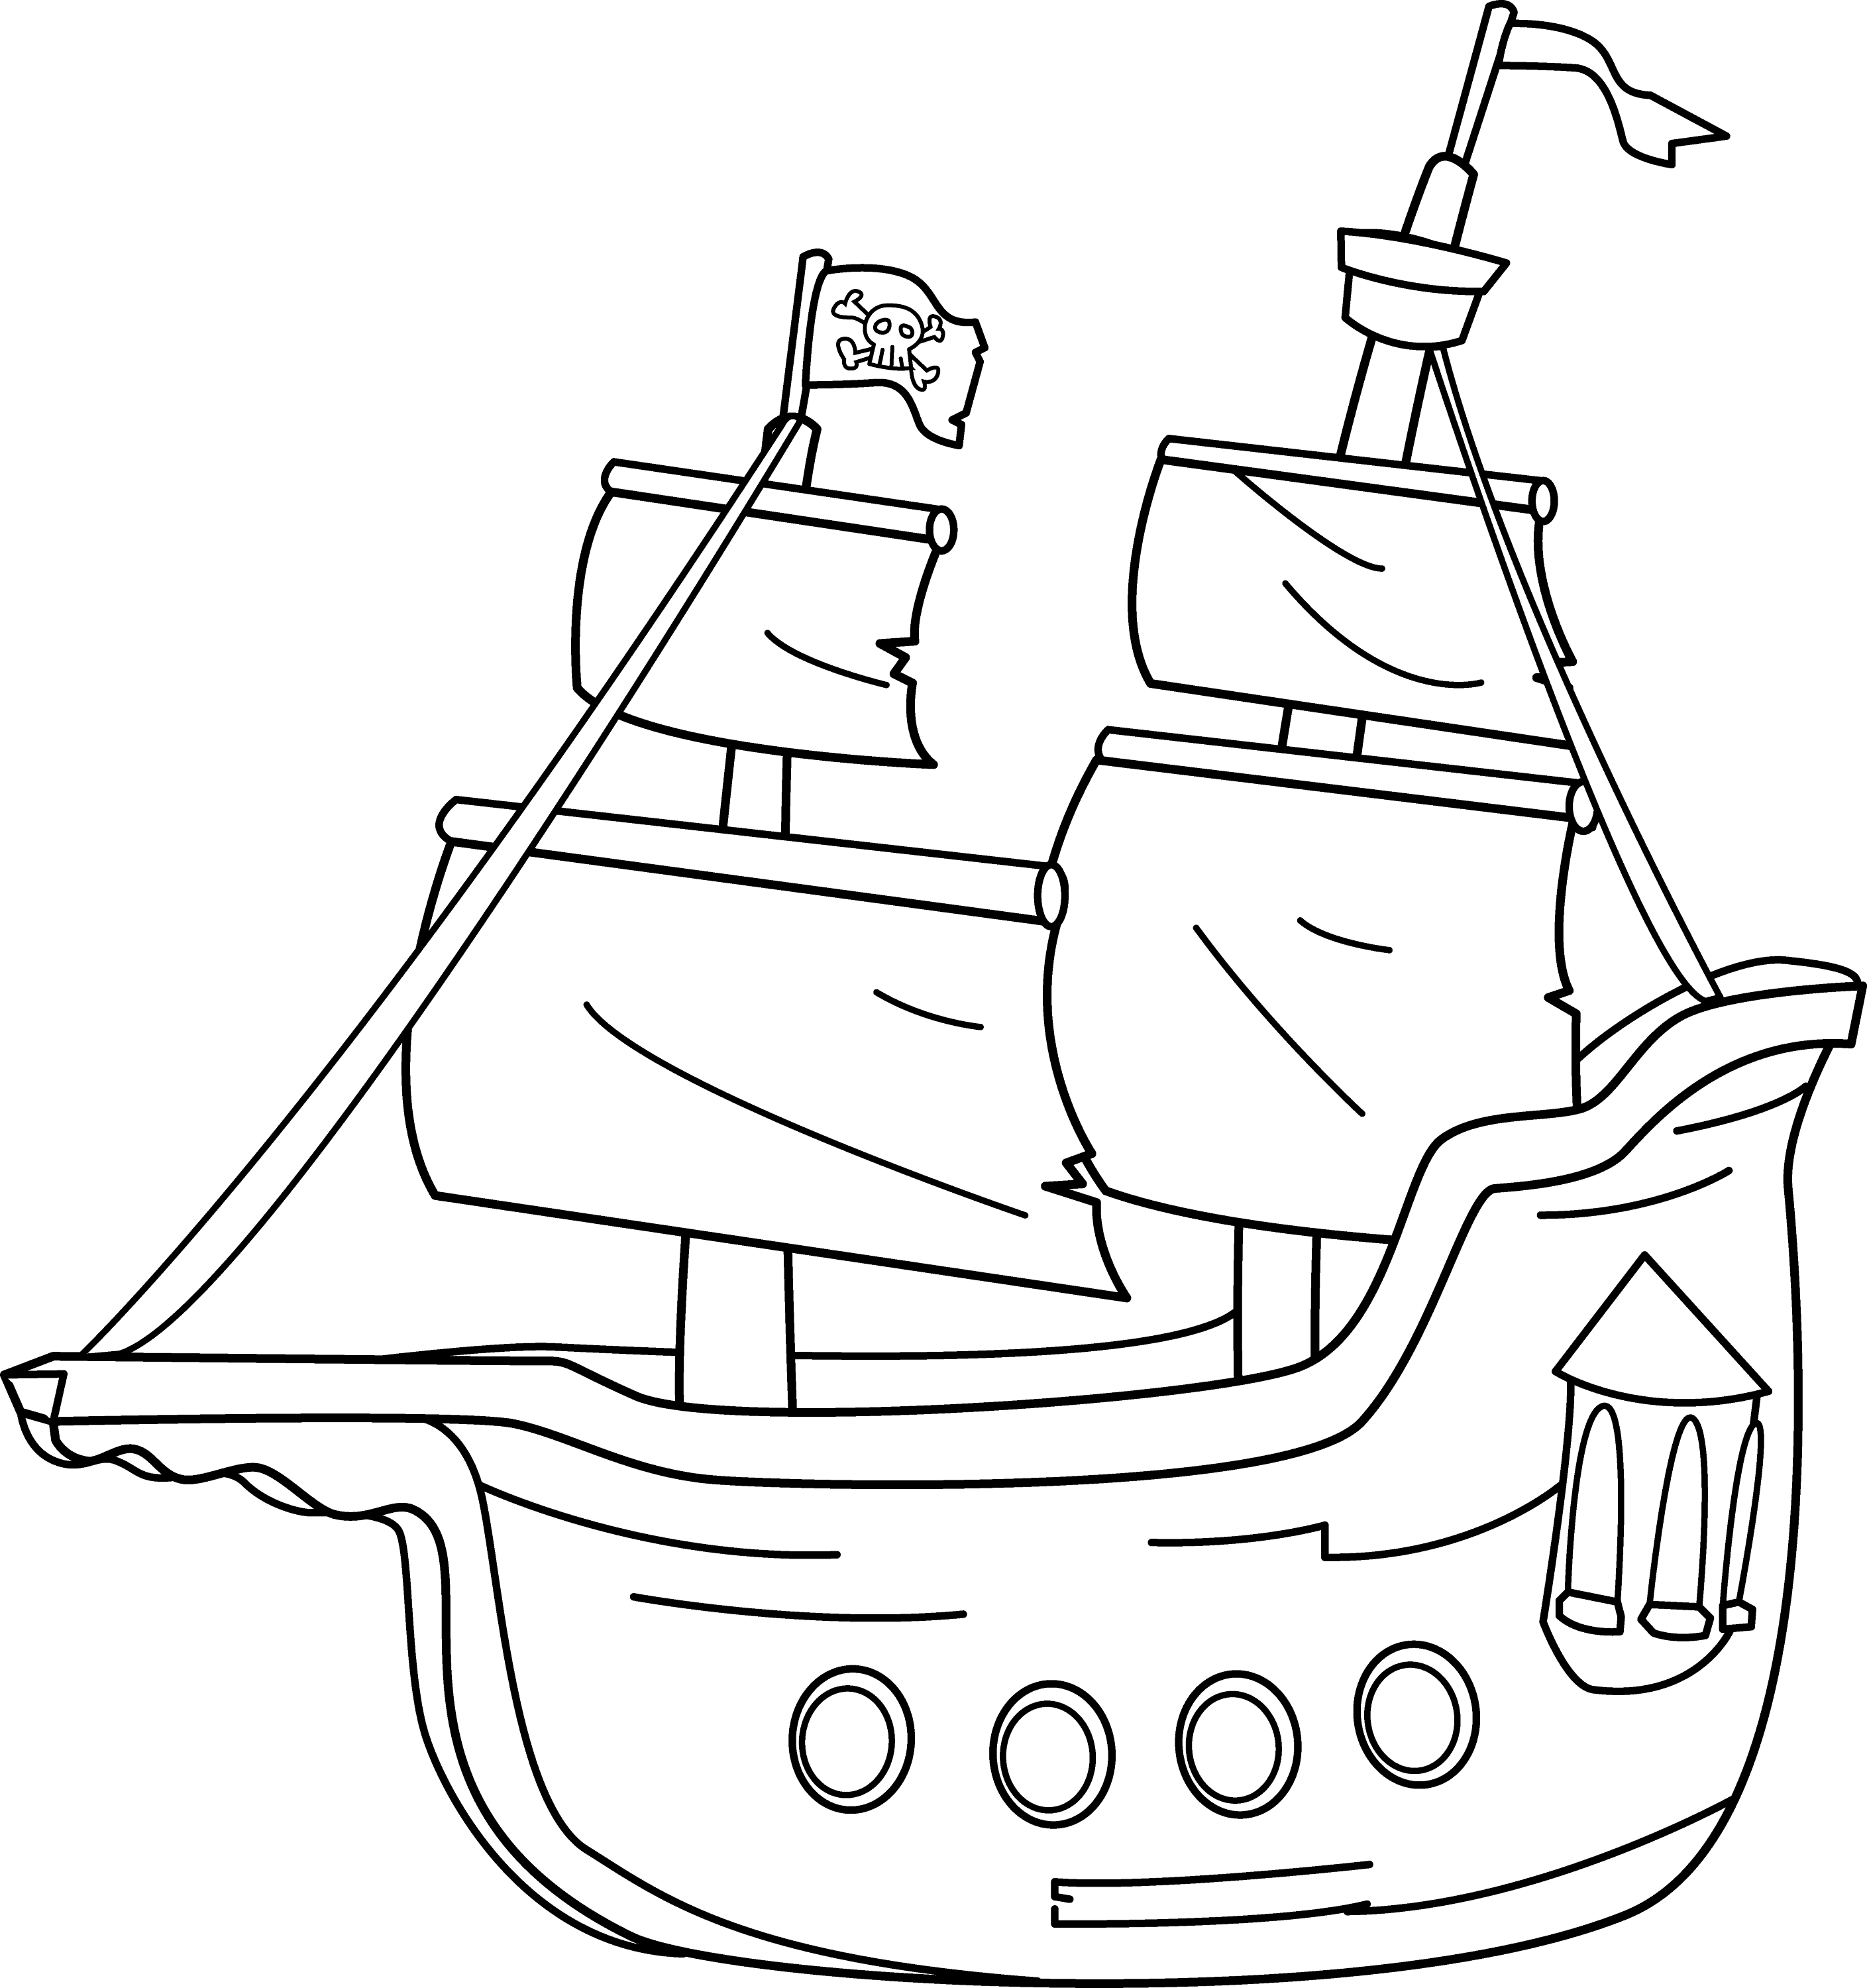 pirate ship clipart black and white - photo #8